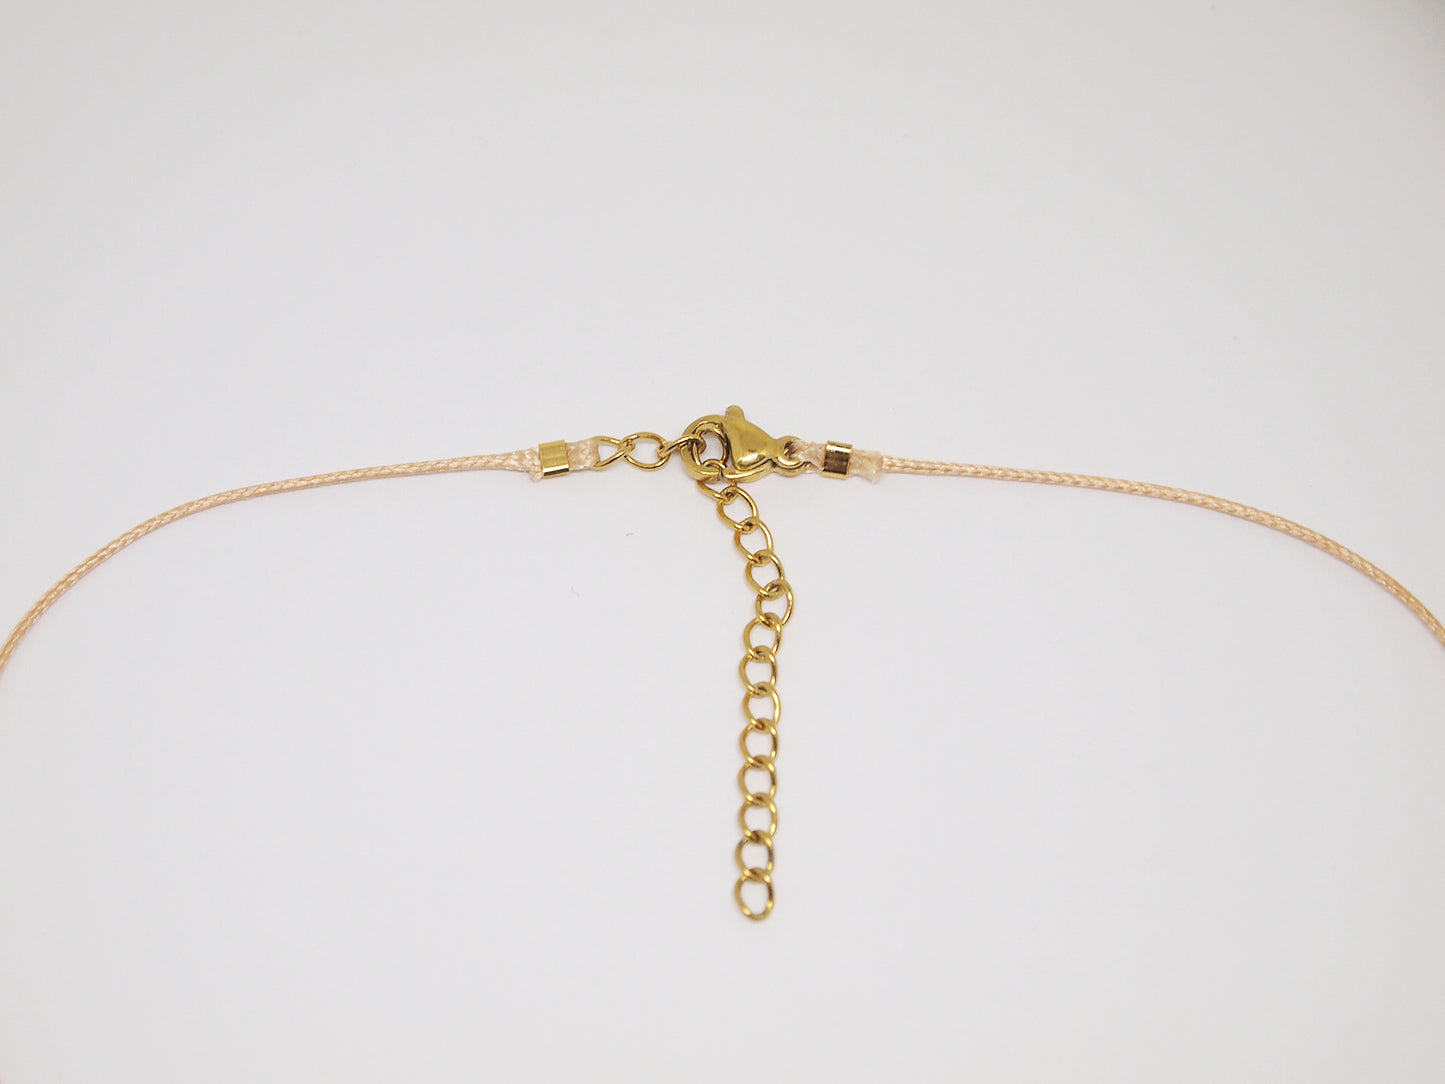 Beaded Angelite cord necklace